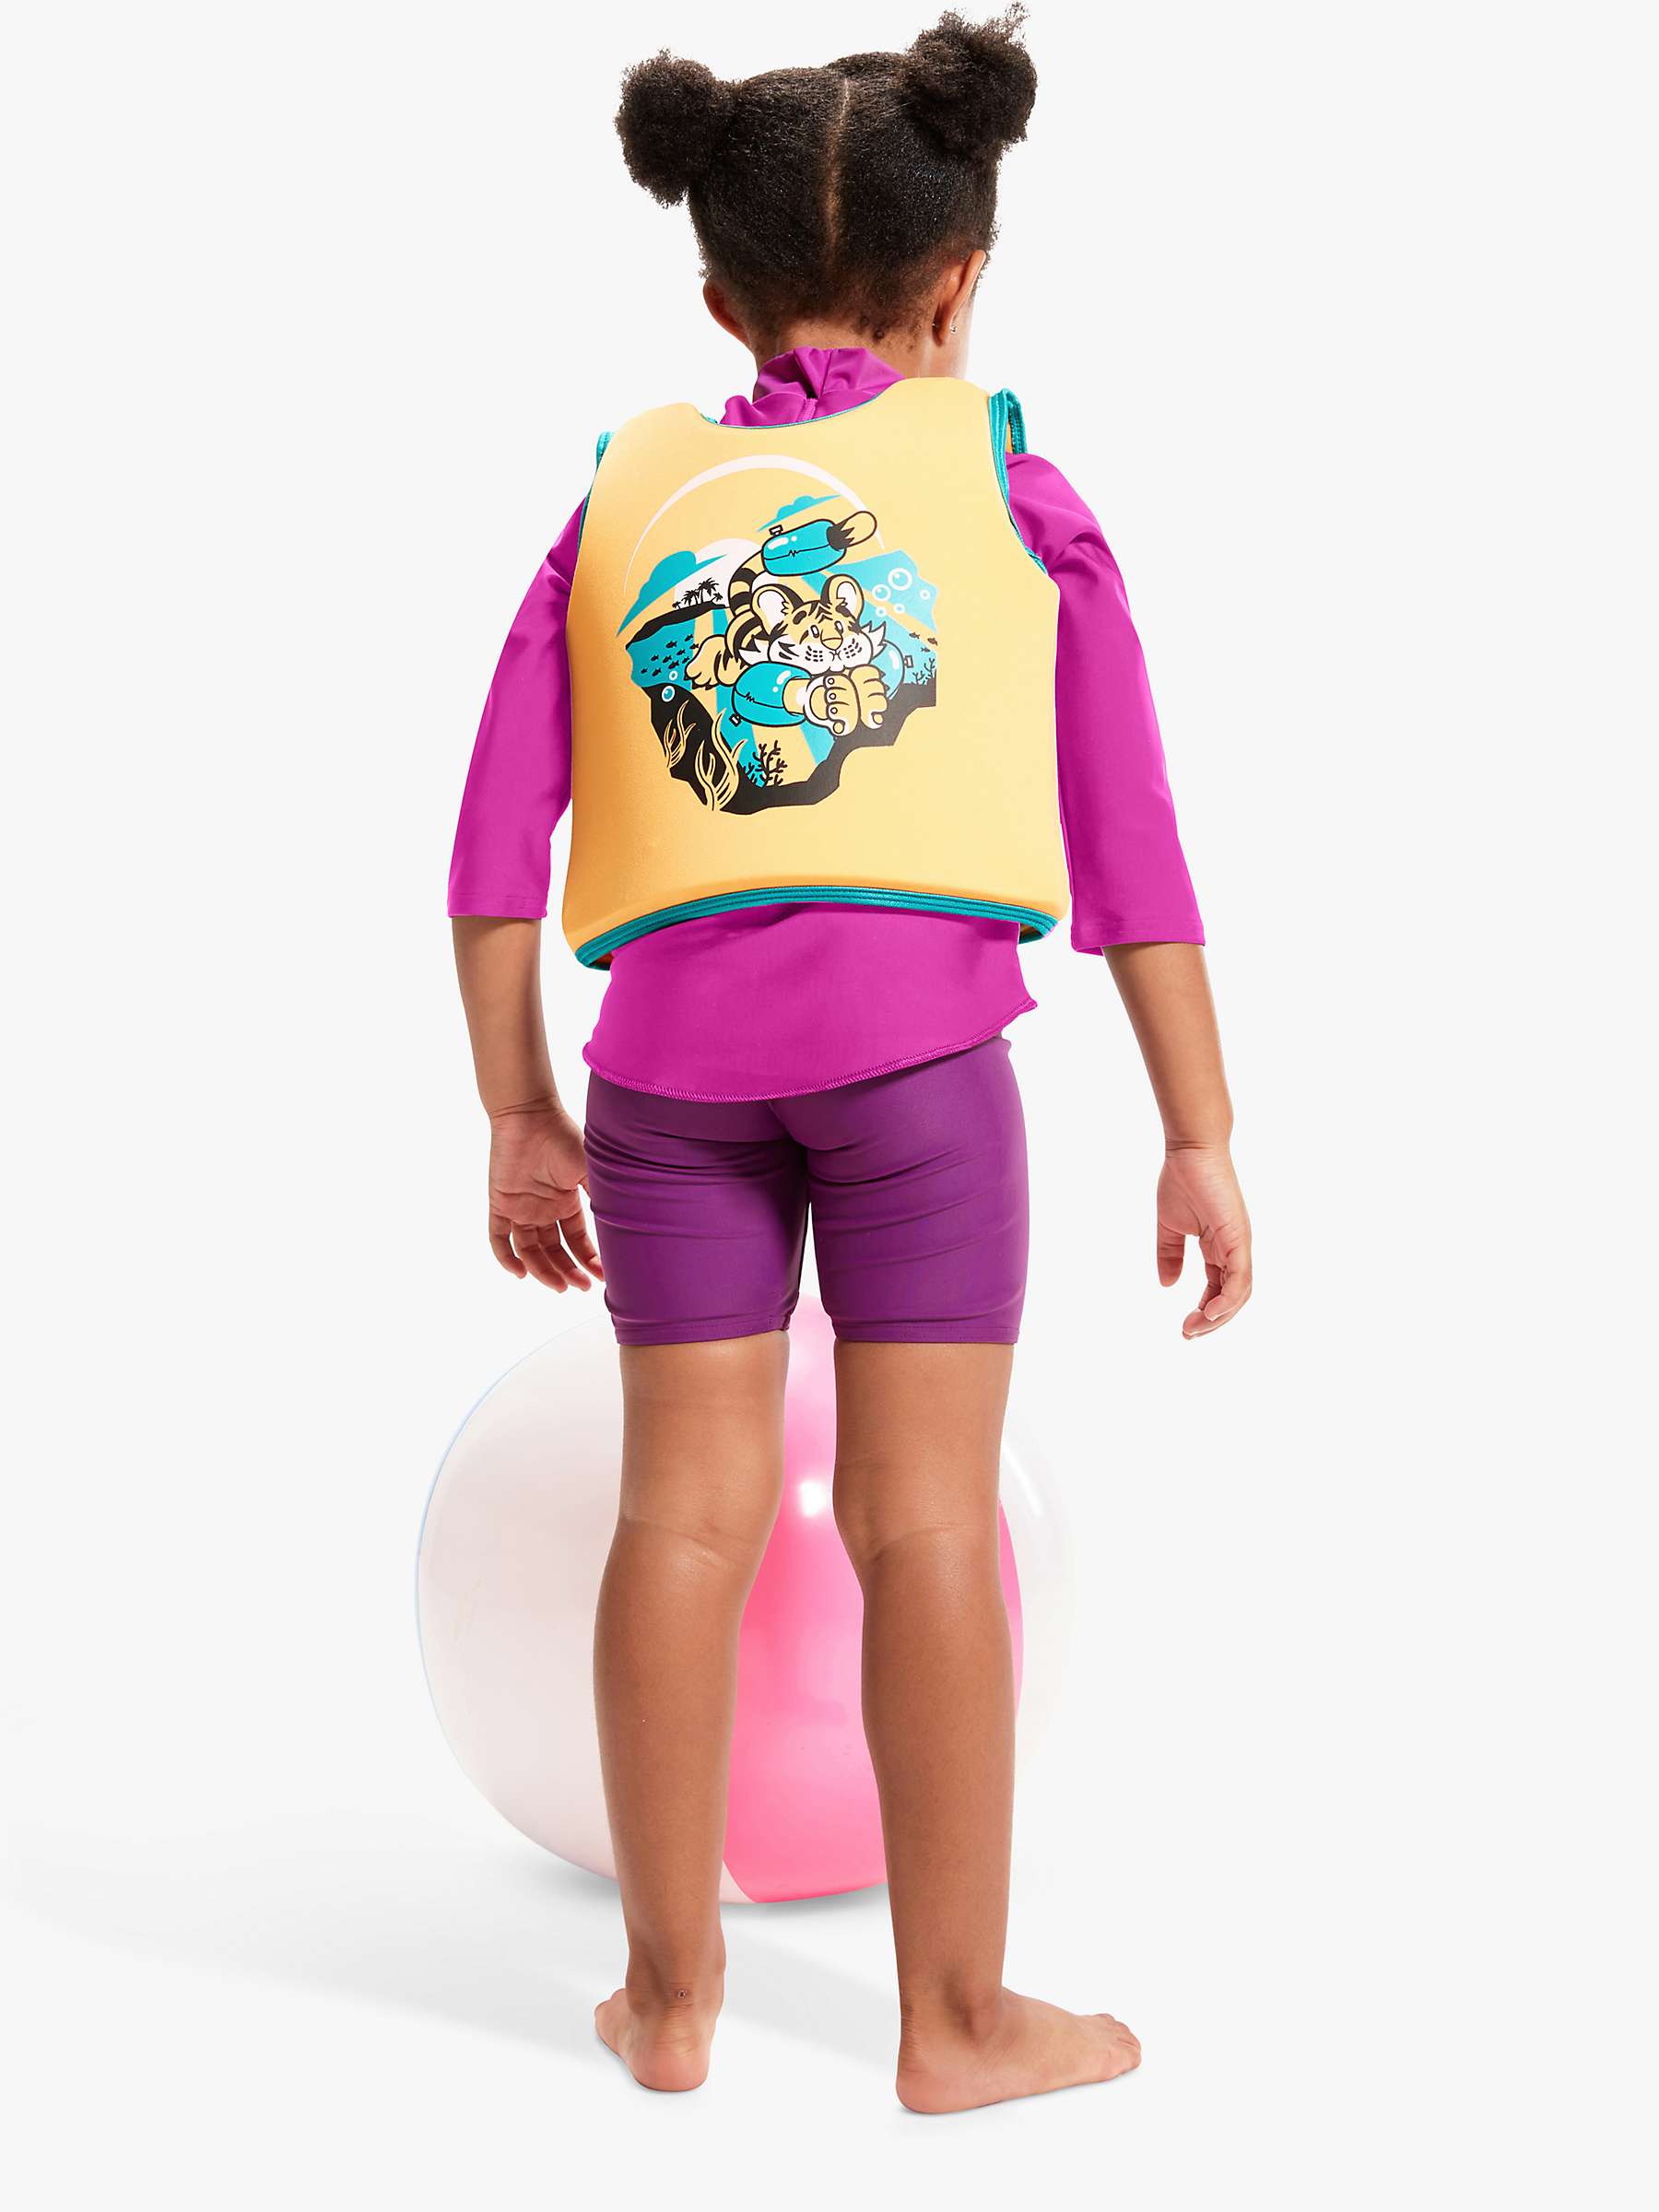 Buy Speedo Baby Tiger Float Vest, Orange/Aqua Online at johnlewis.com